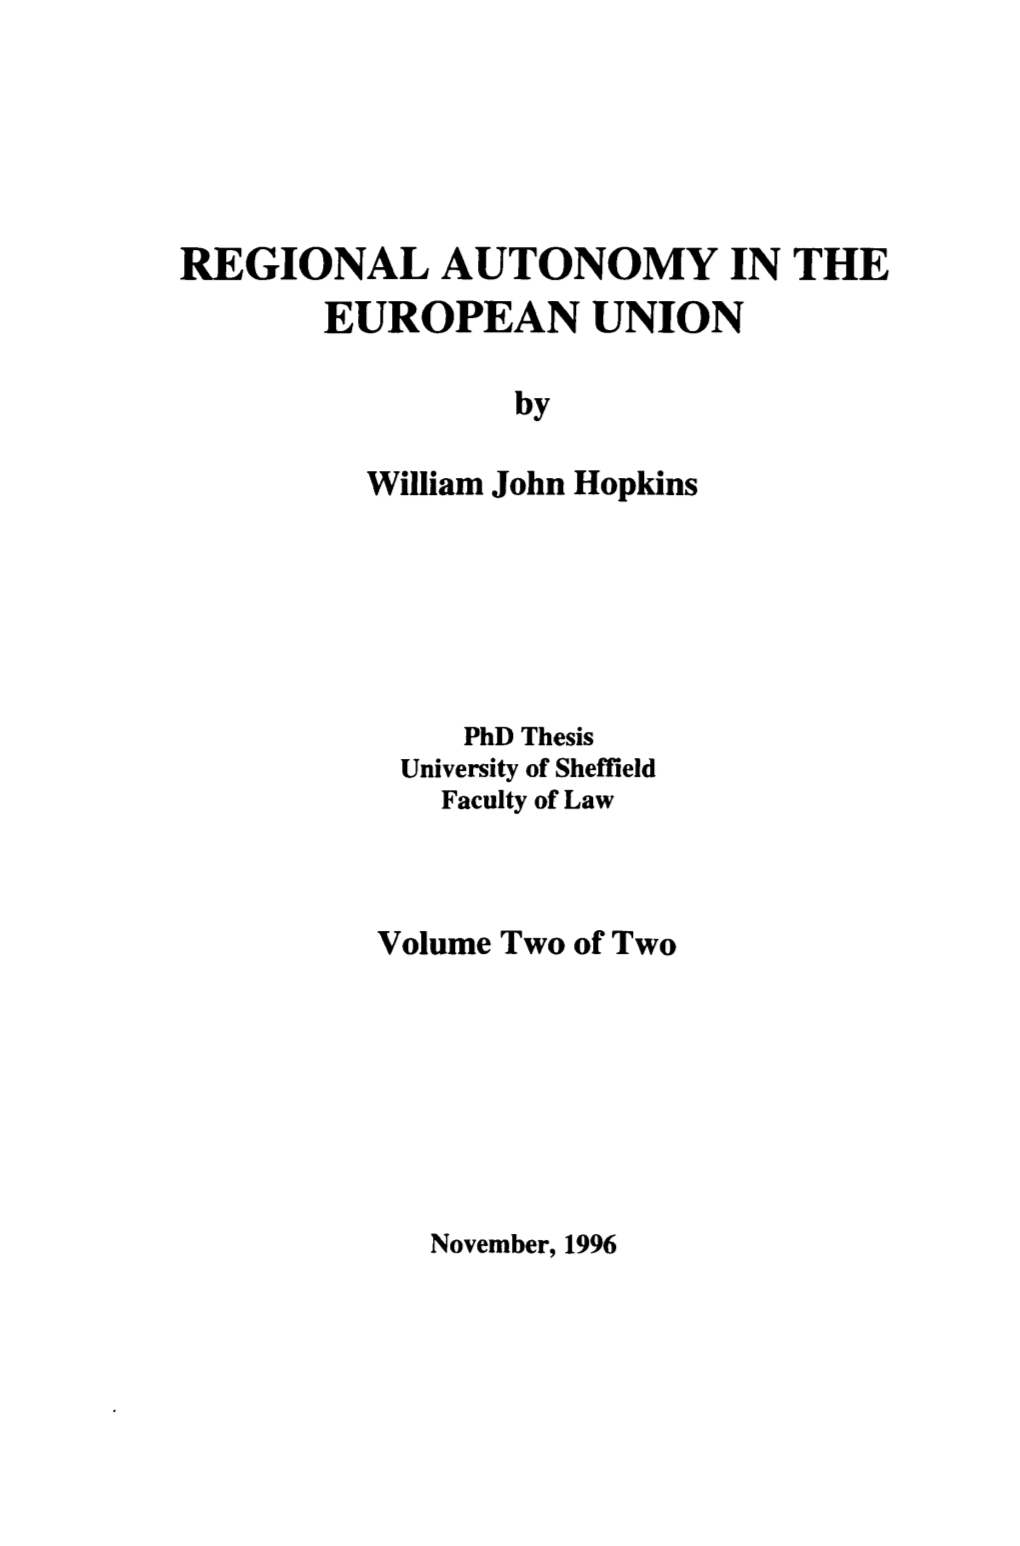 Regional Autonomy in the European Union